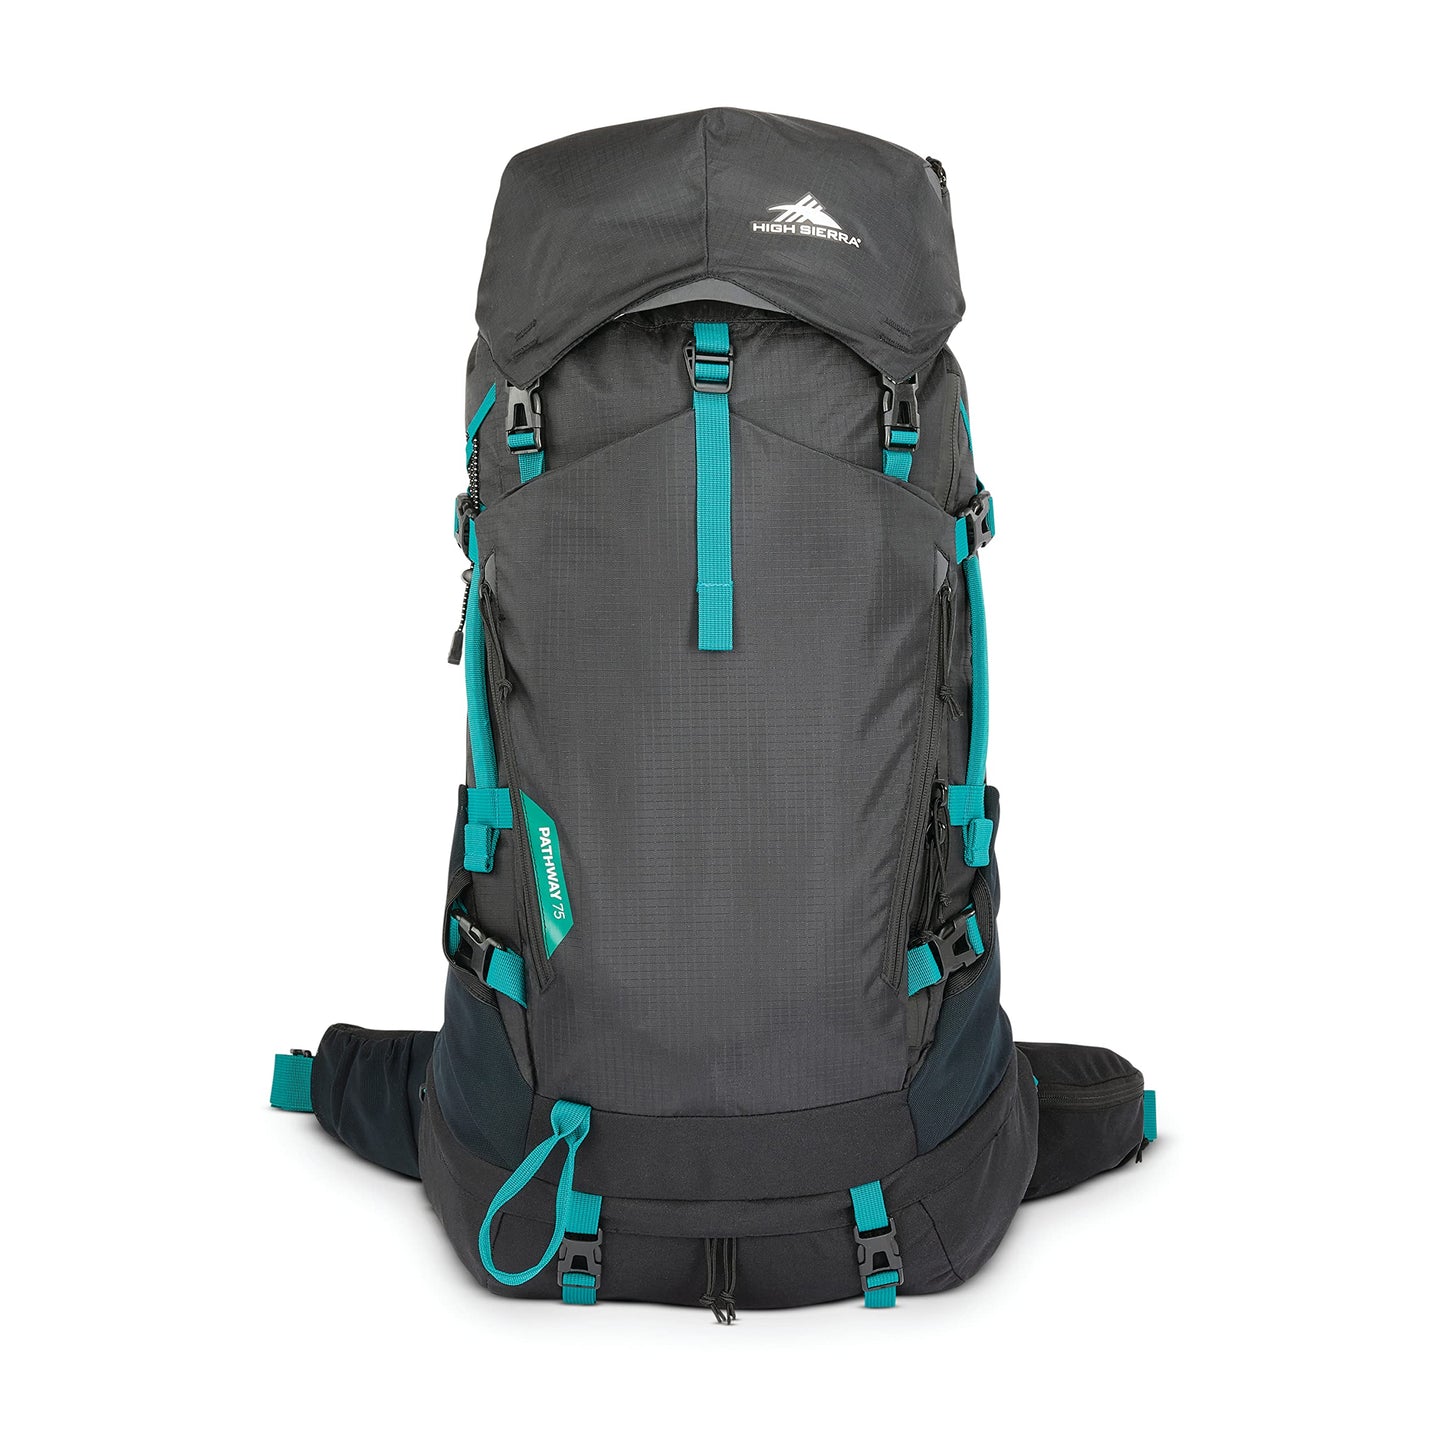 High Sierra Pathway 2.0 Hiking Backpack, Black, One Size